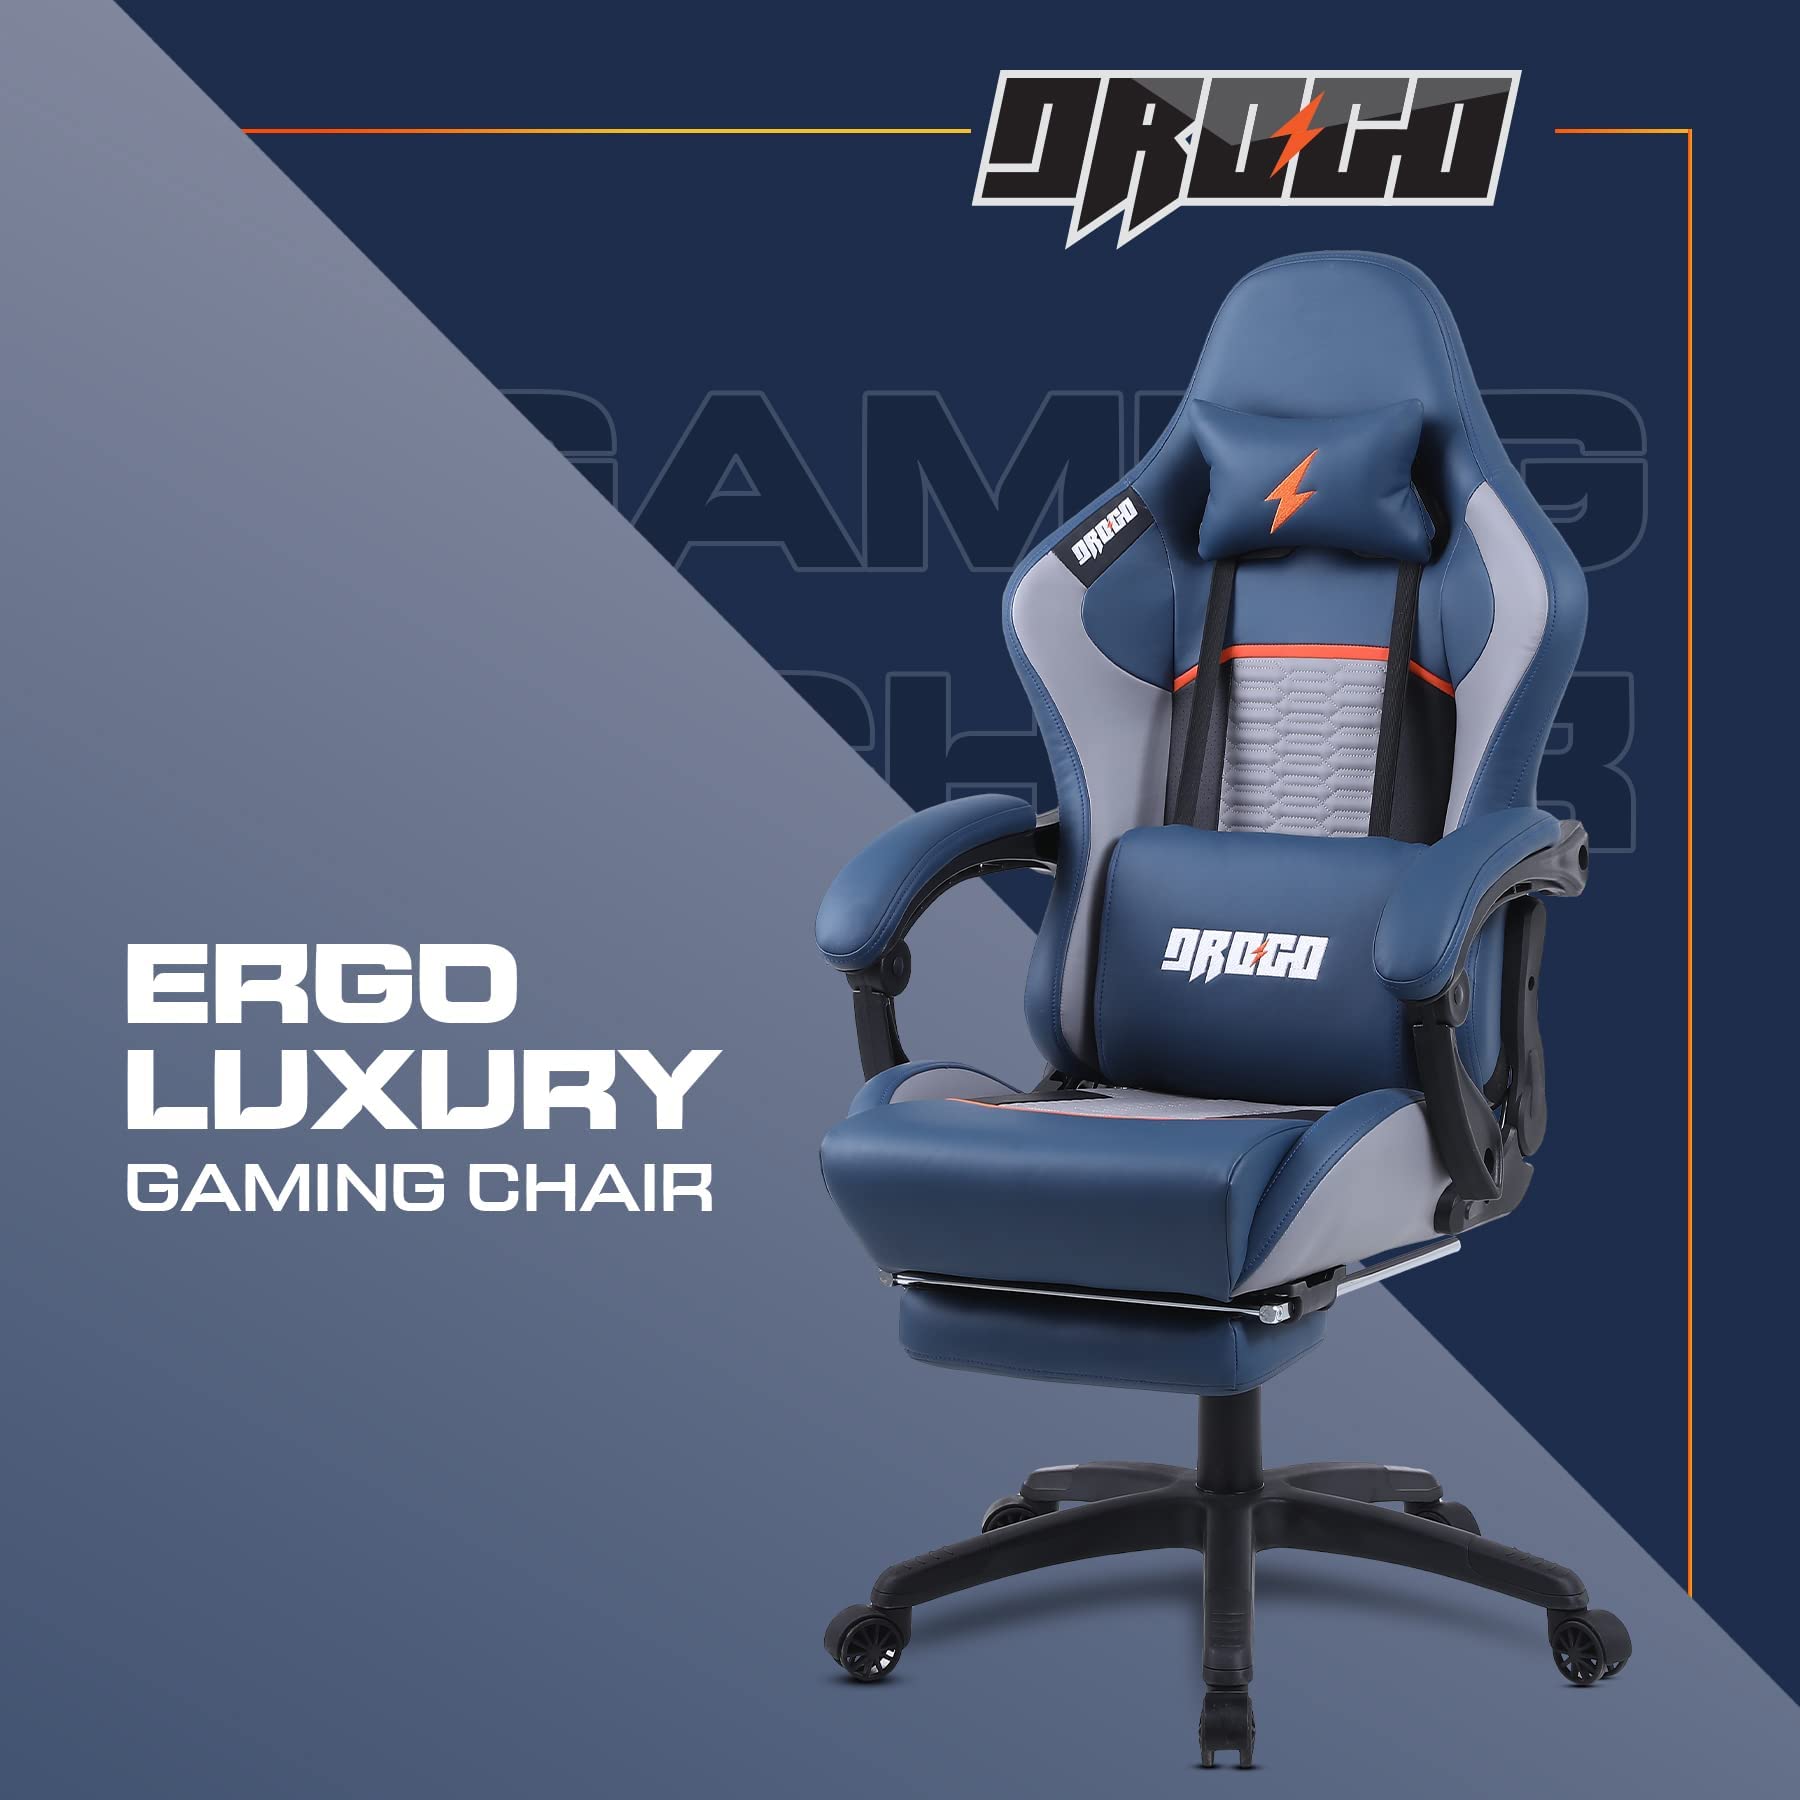 Drogo Racer Ergonomic Gaming Chair